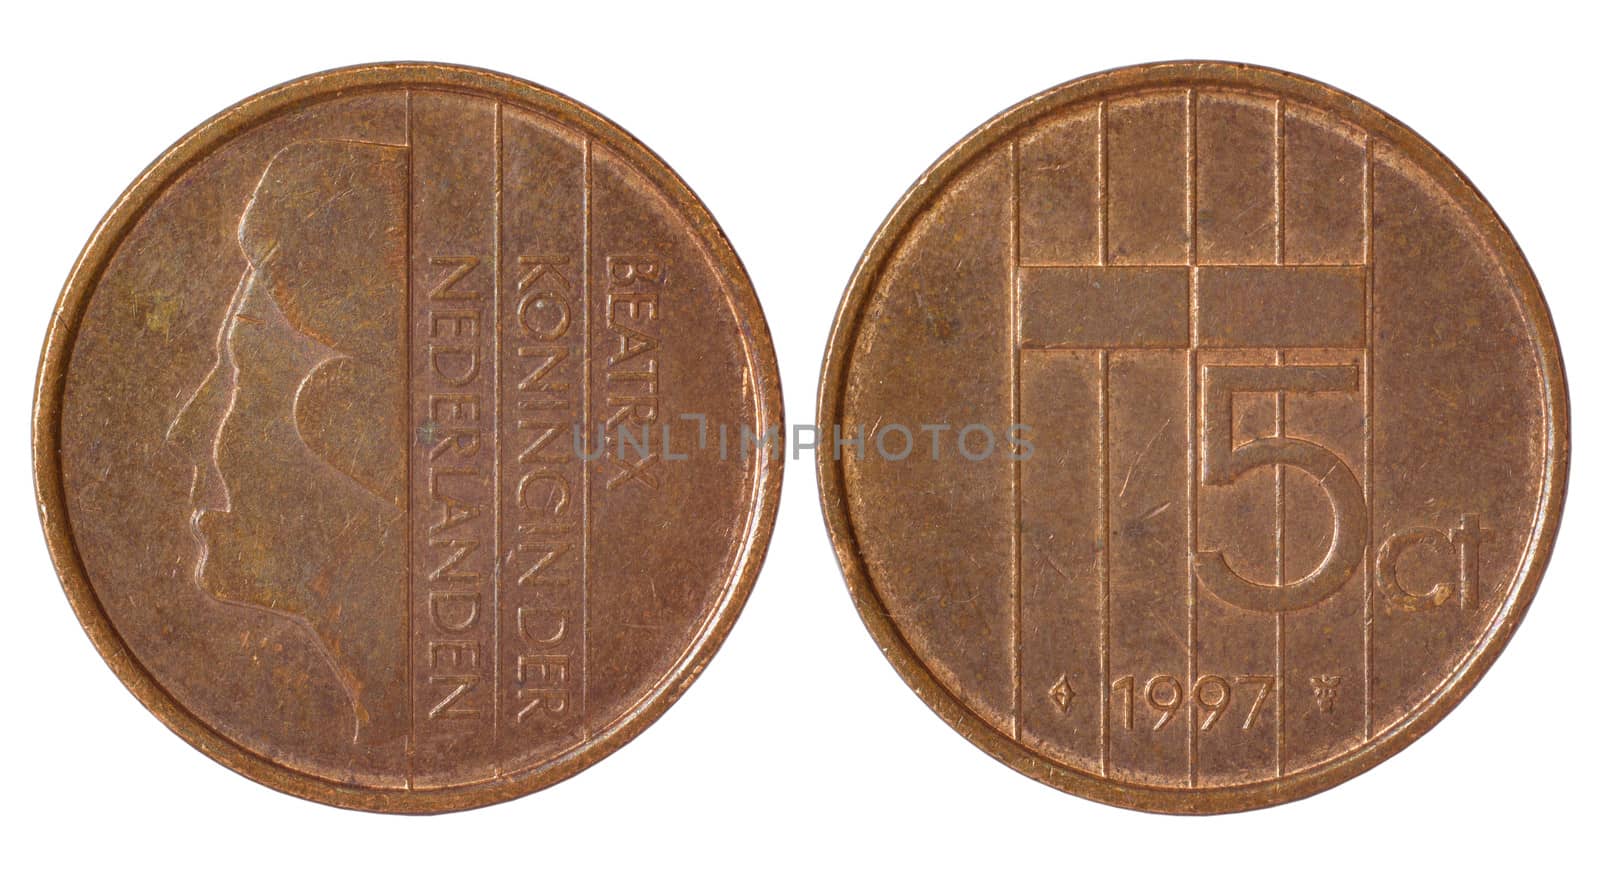 rare retro coin of netherlands by raddnatt